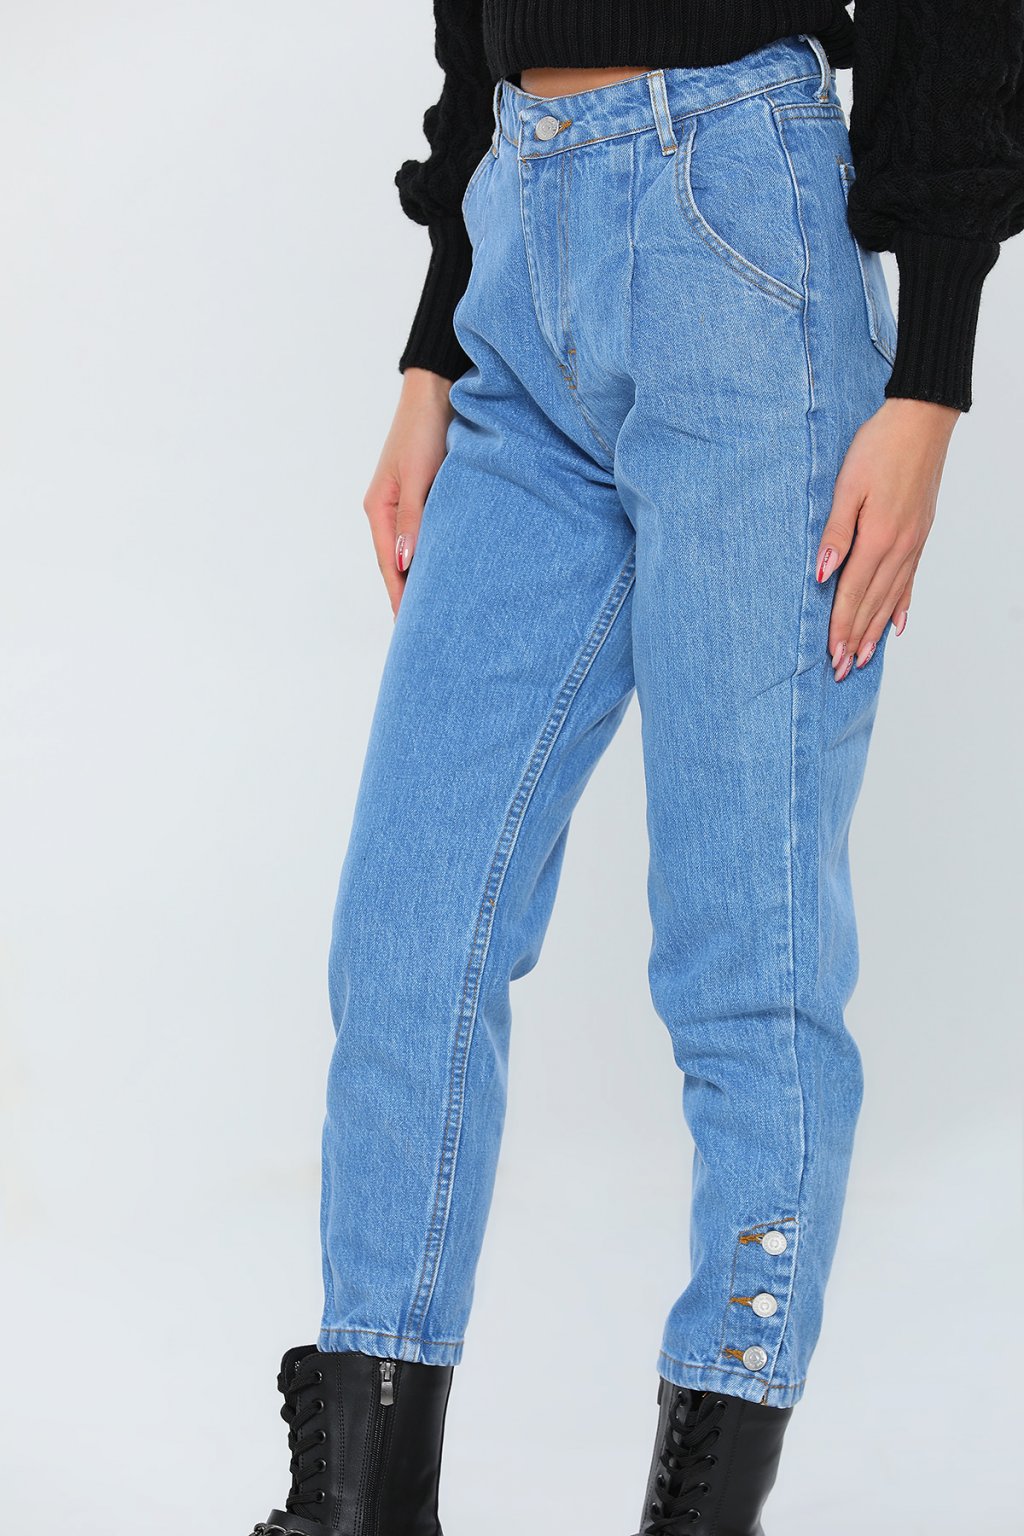 Modré dámské džíny | FASHIONSUGAR e-shop